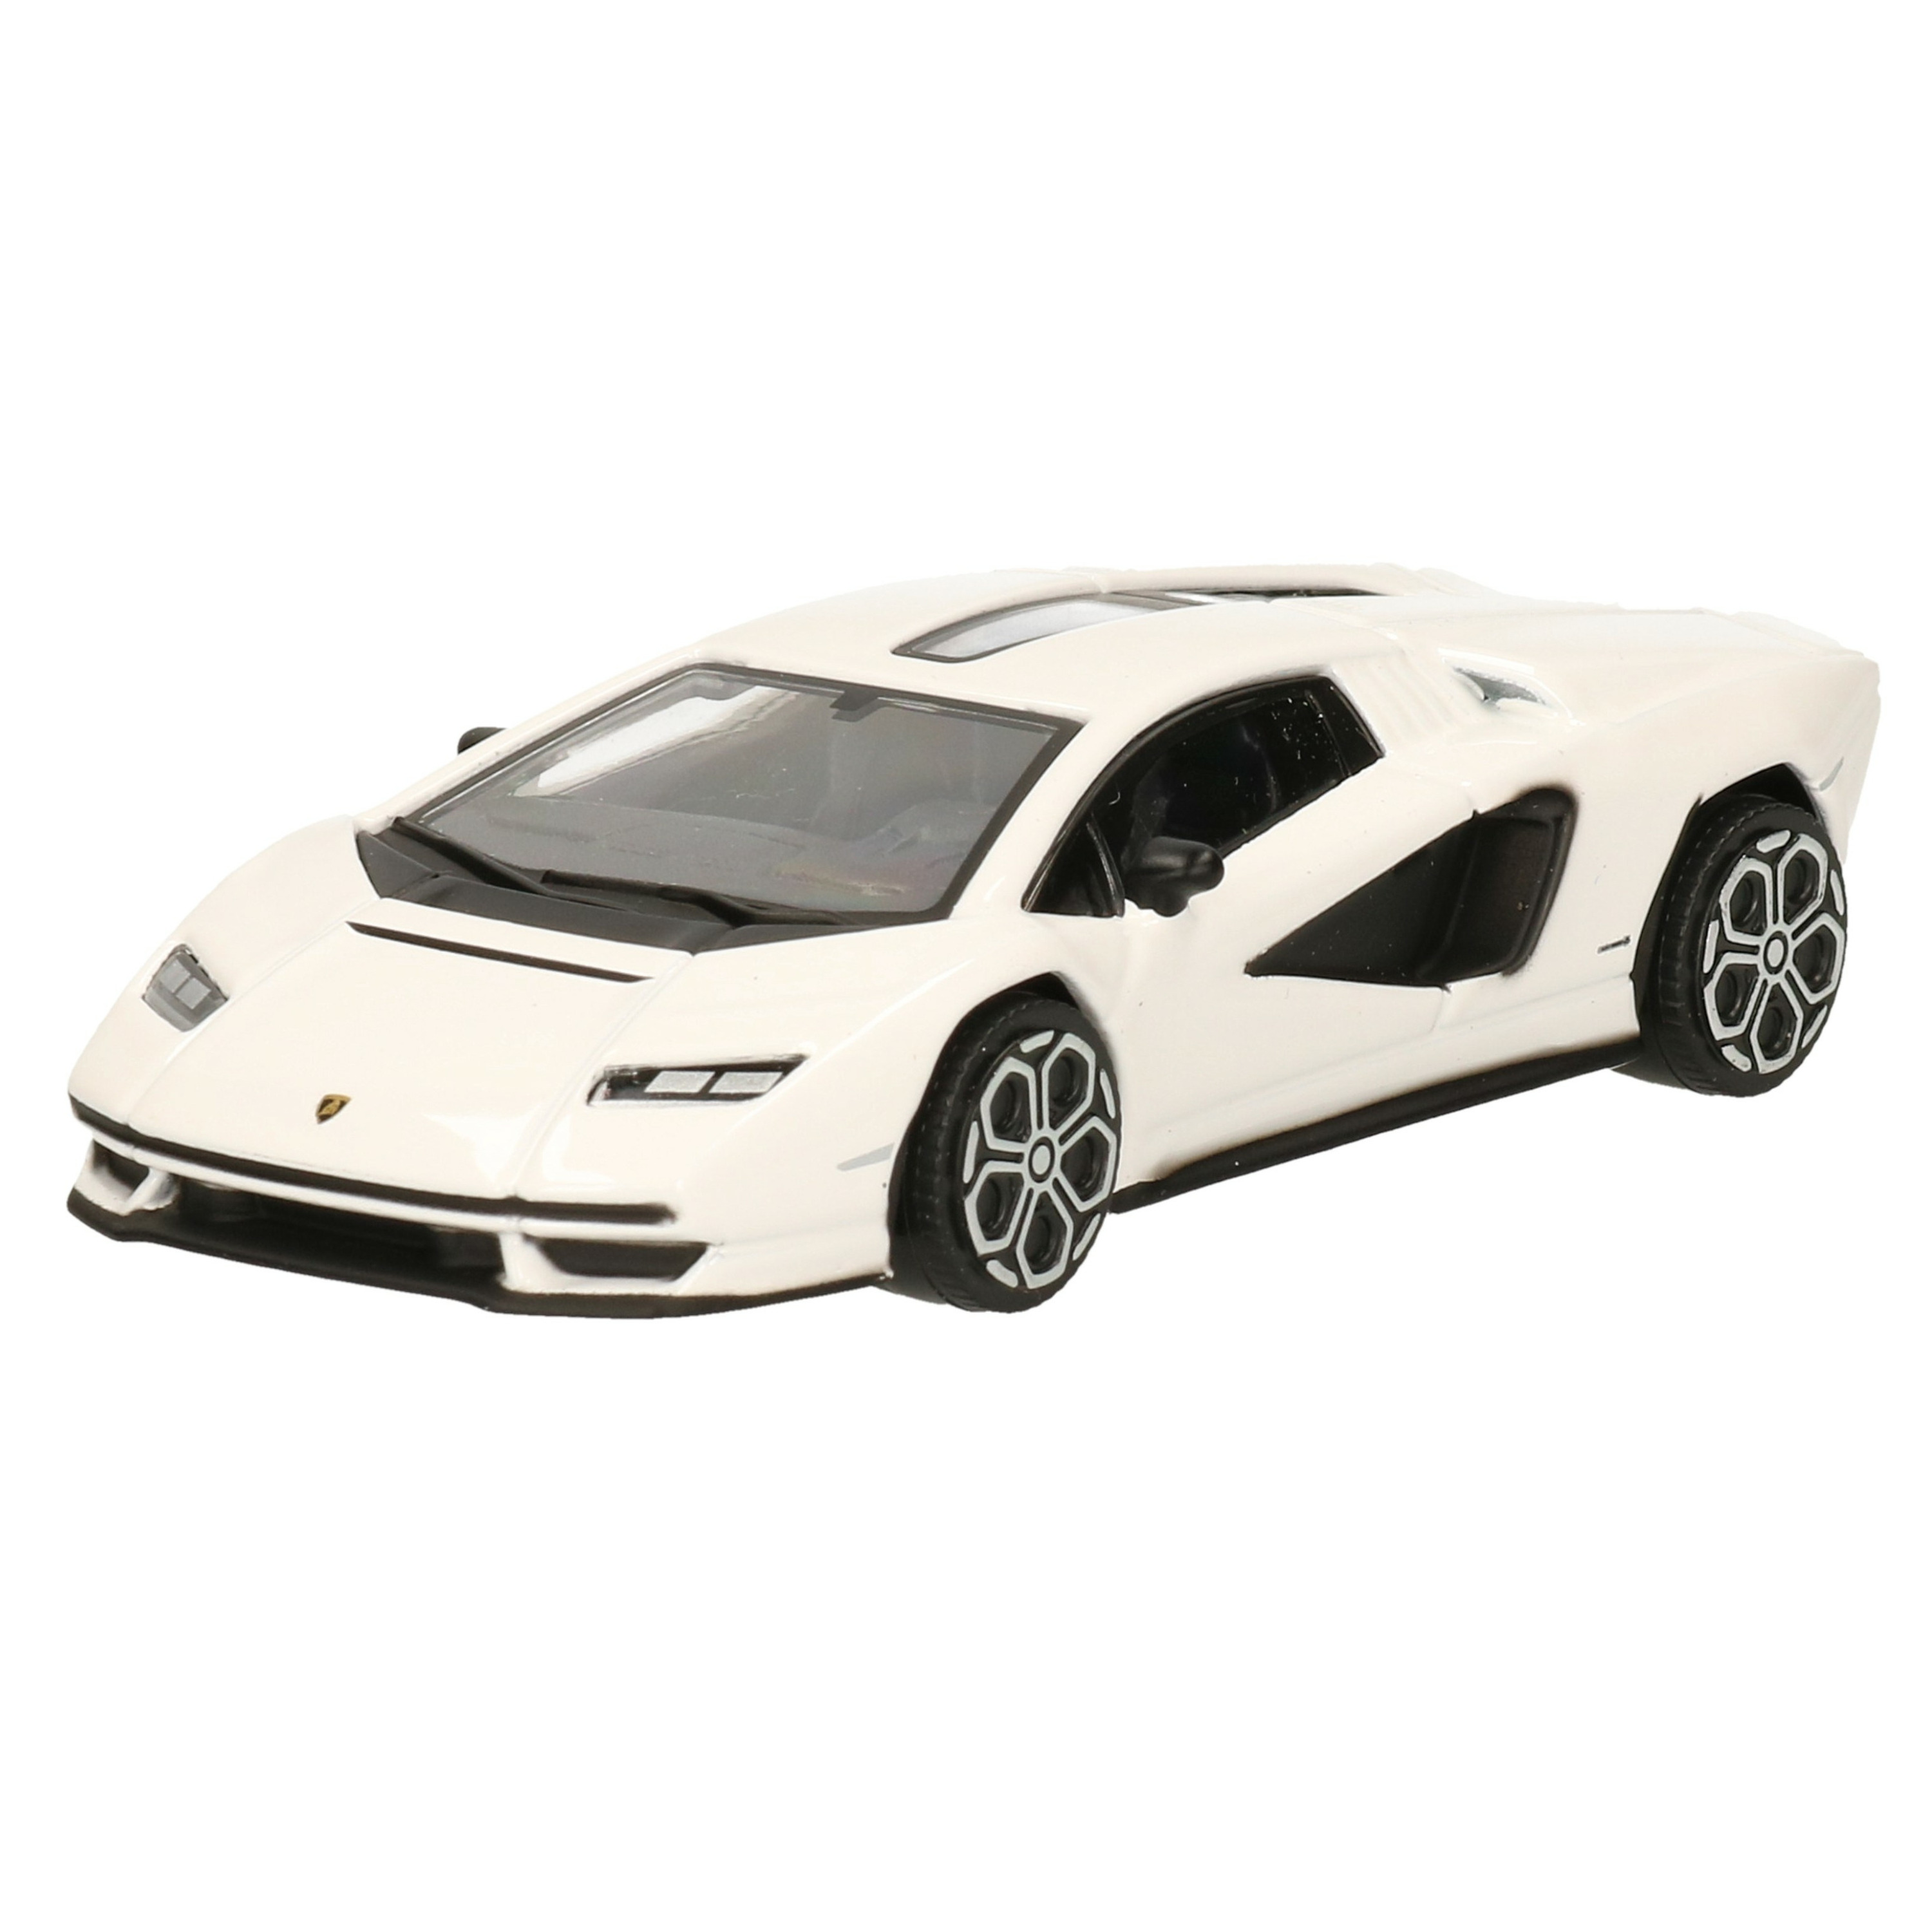 Modelauto-speelgoedauto Lamborghini Countach schaal 1:43-11 x 5 x 3 cm